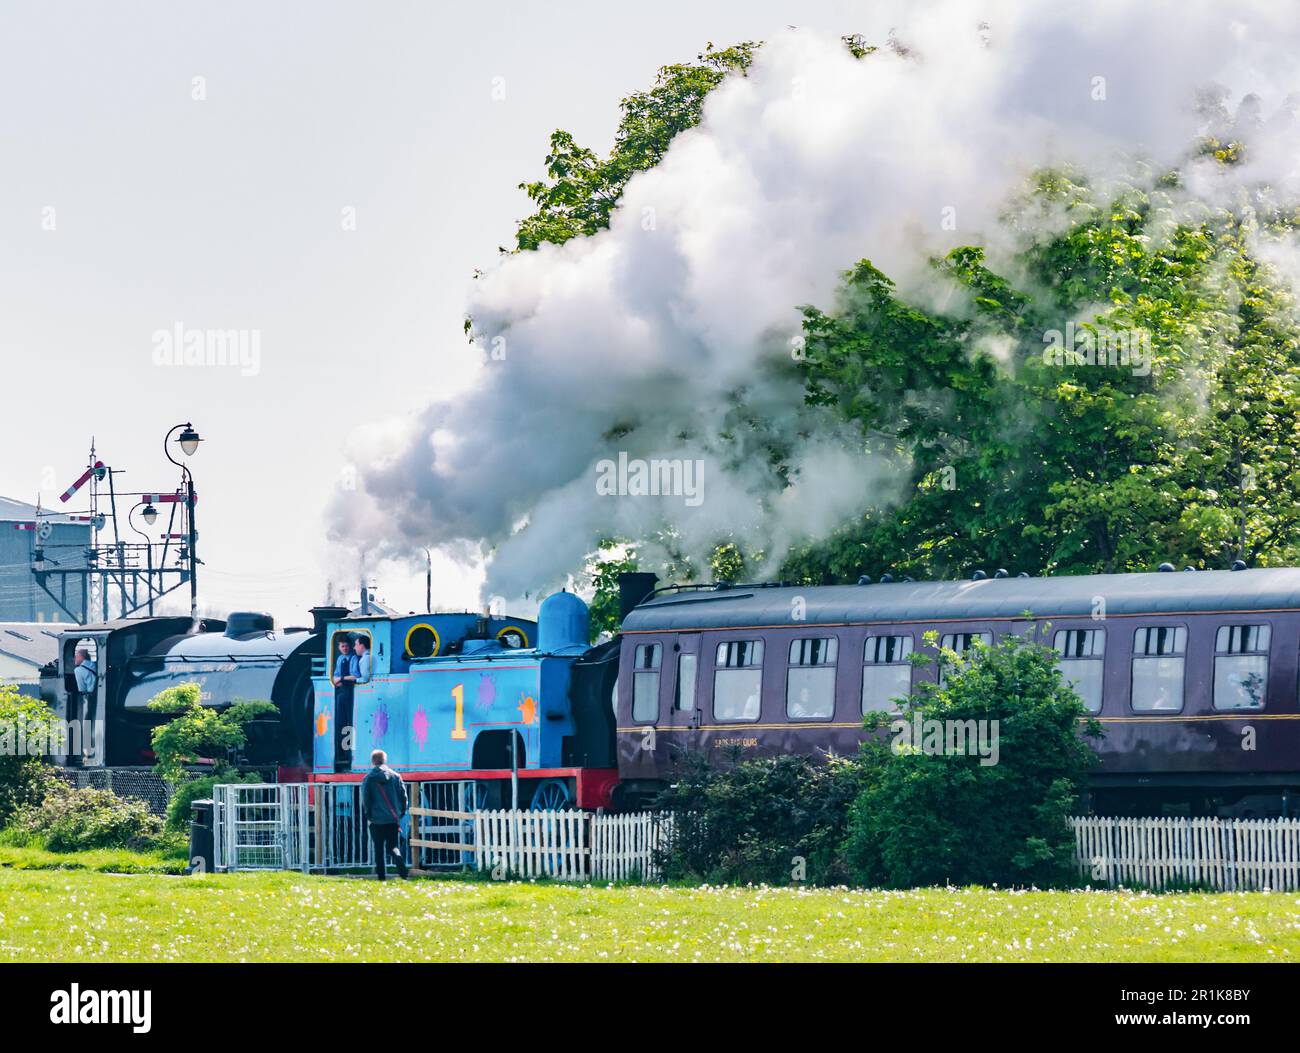 A steam train locomotive pulling a carriage, Bo'ness Kinneil vintage railway, Scotland, UK Stock Photo